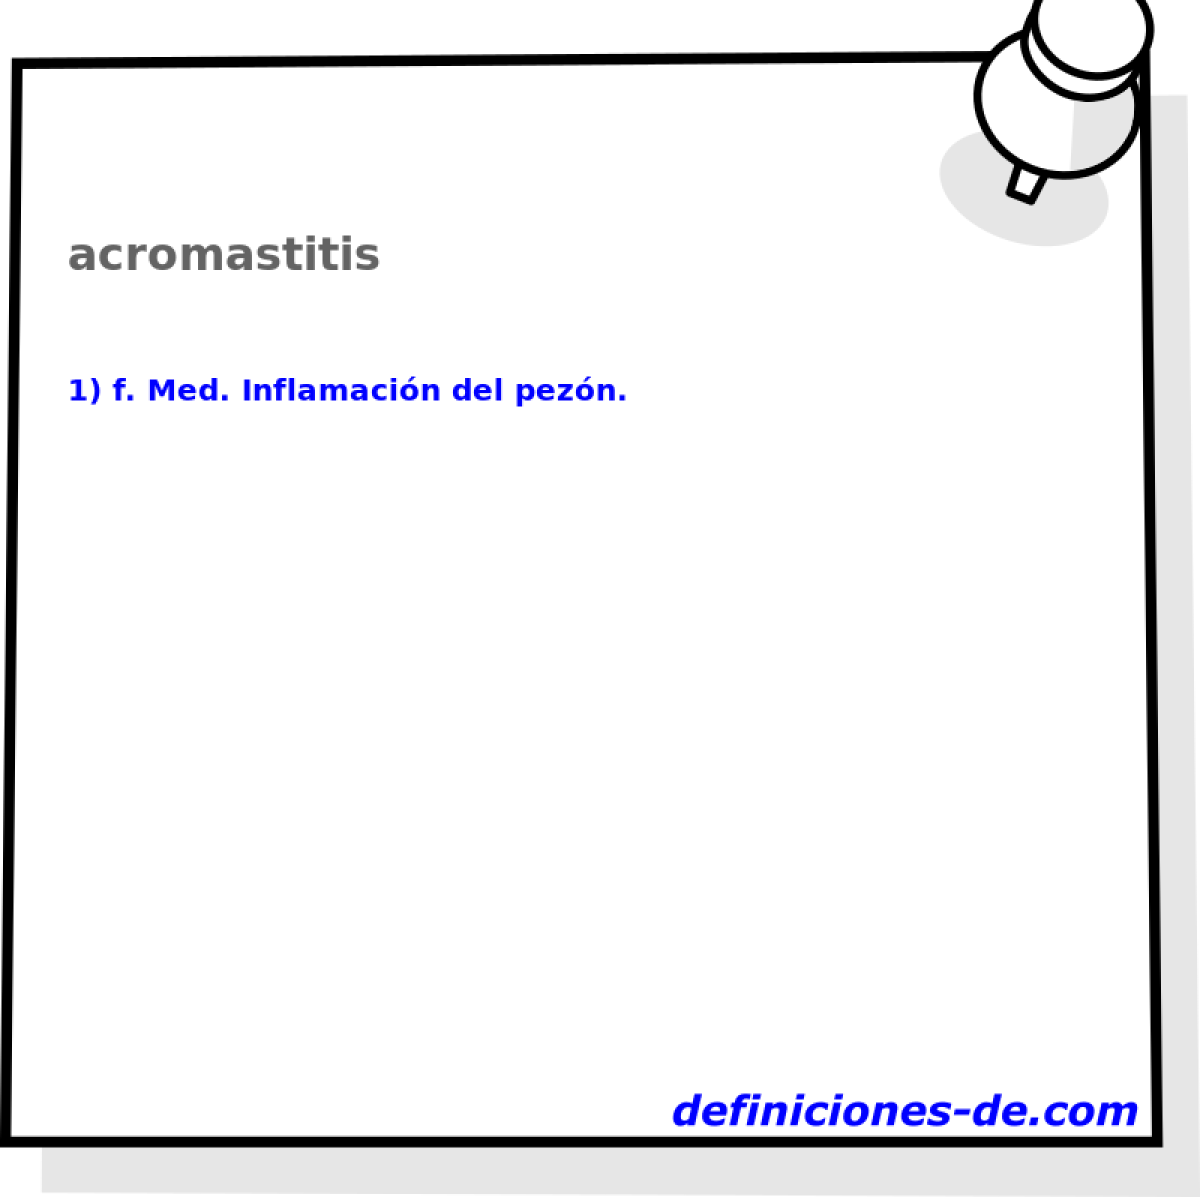 acromastitis 